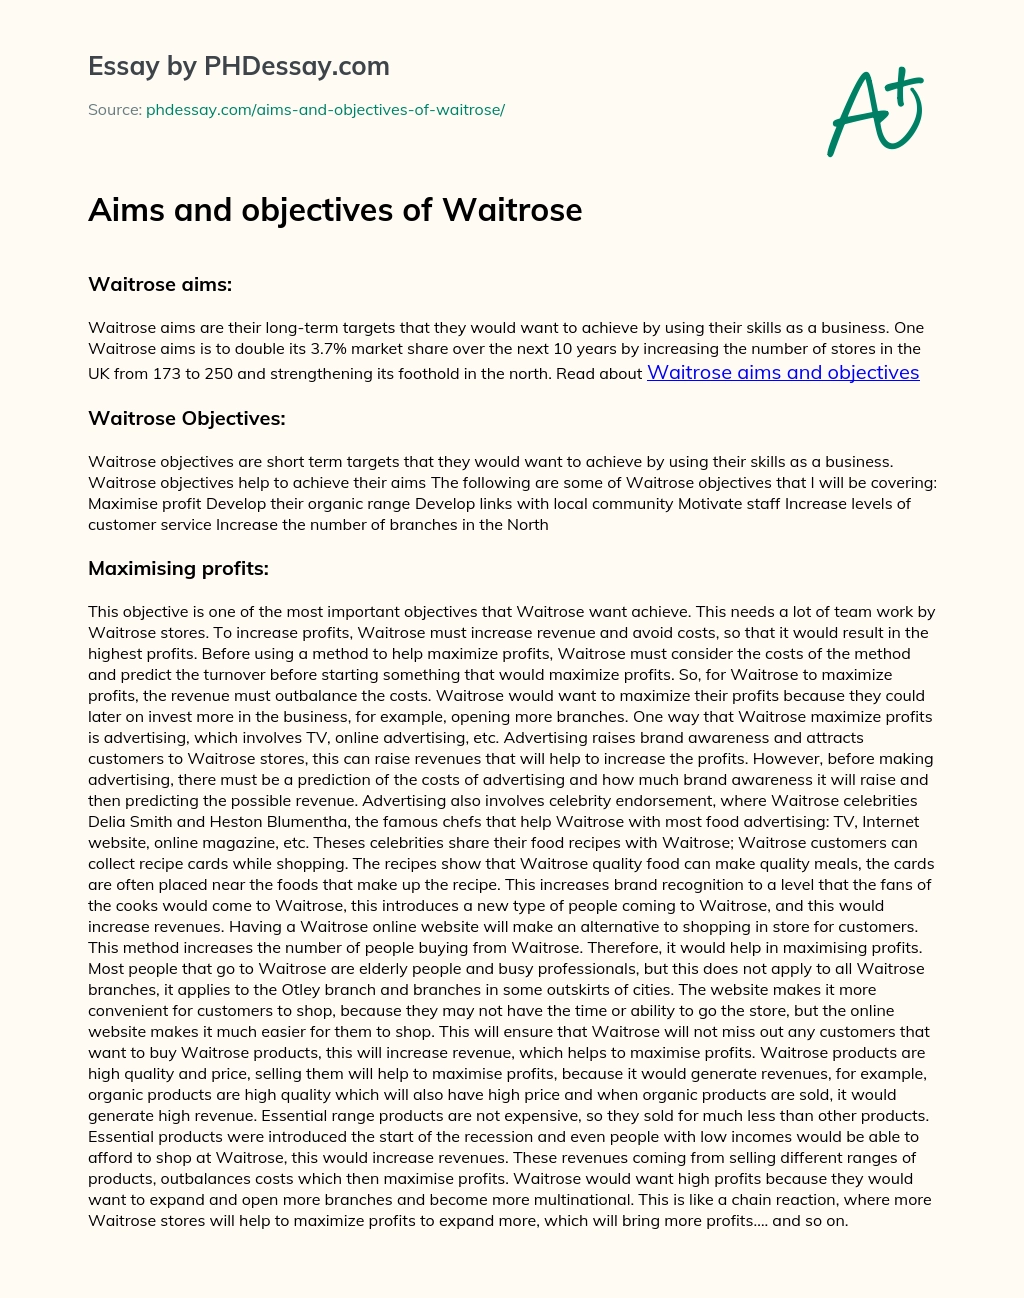 Aims and objectives of Waitrose essay